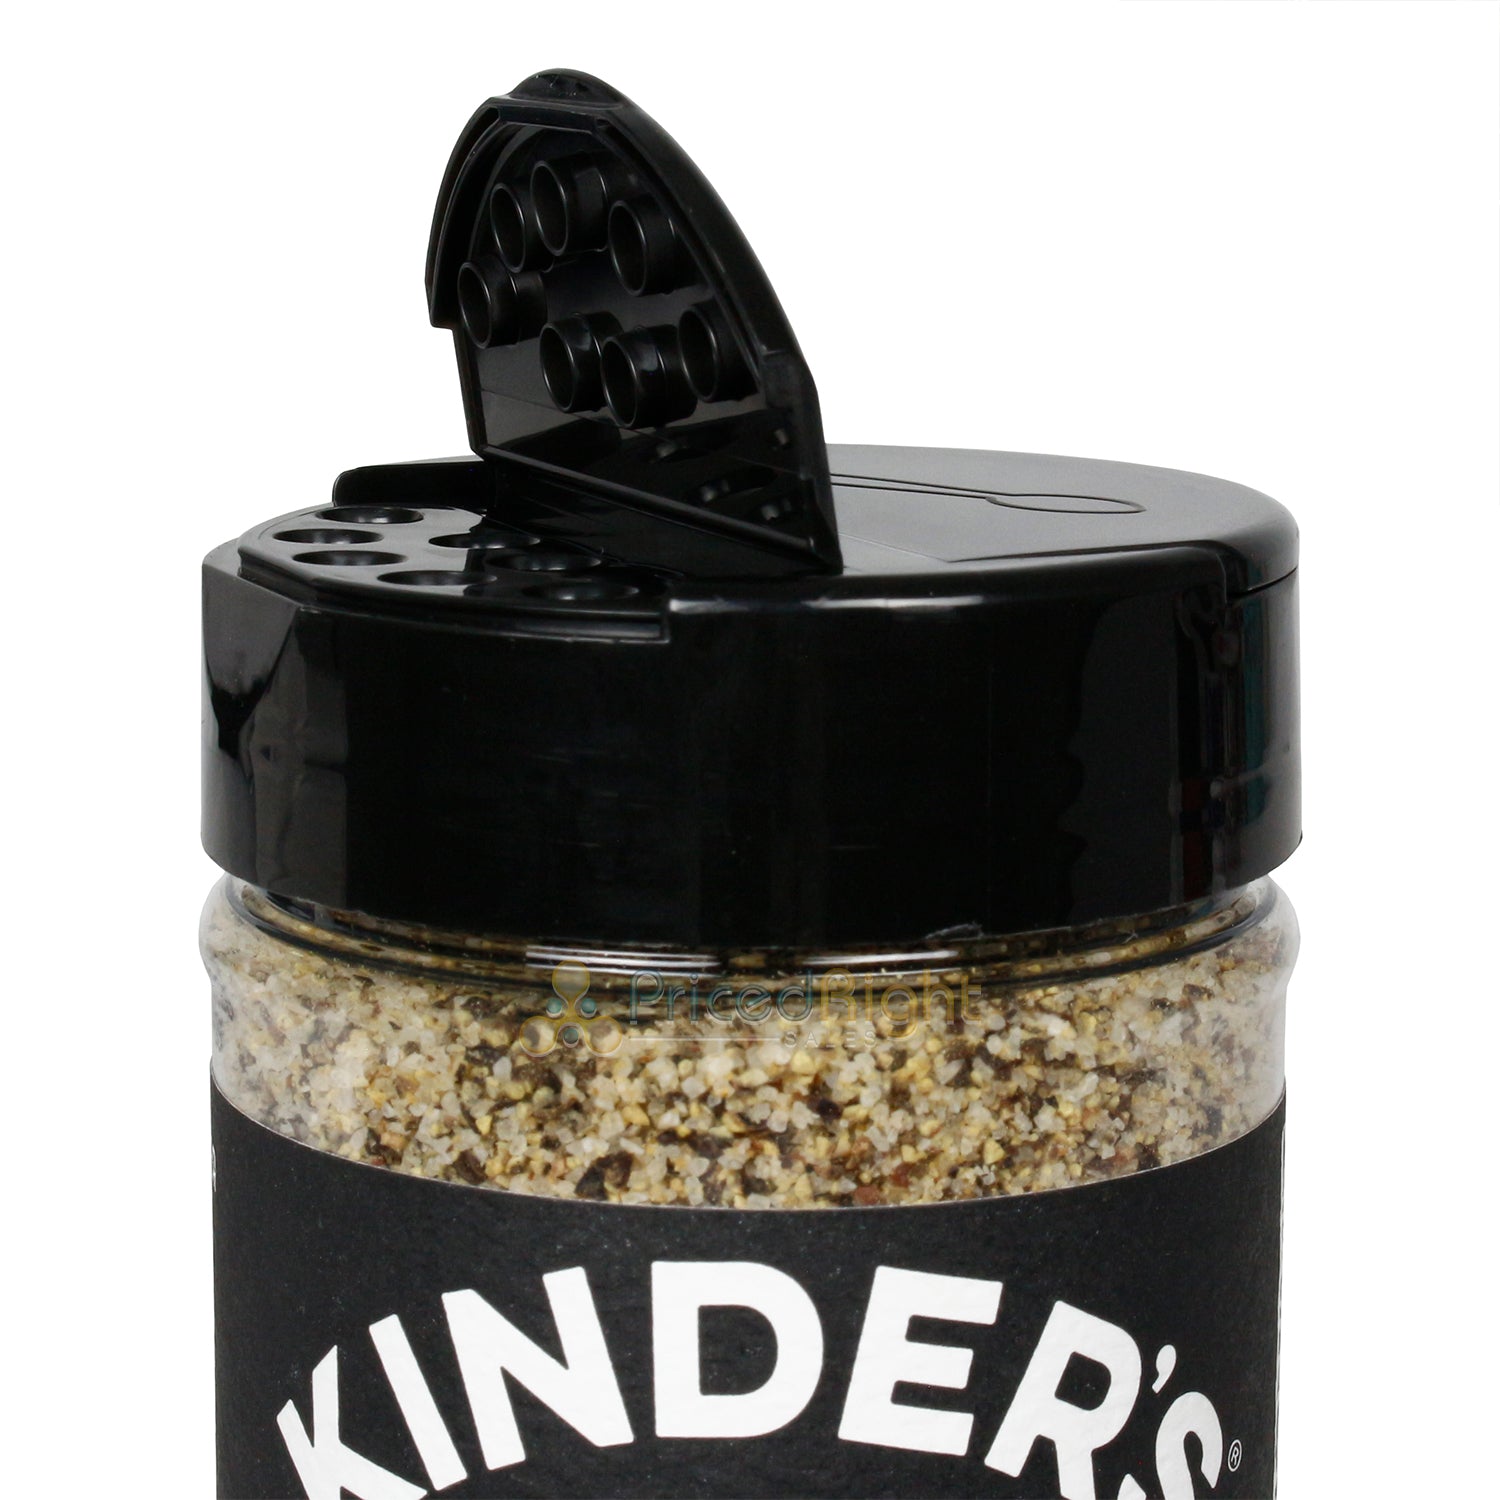 Kinder's Mesquite Salt & Pepper Premium Quality Seasoning Gluten Free 10.6 Ounce